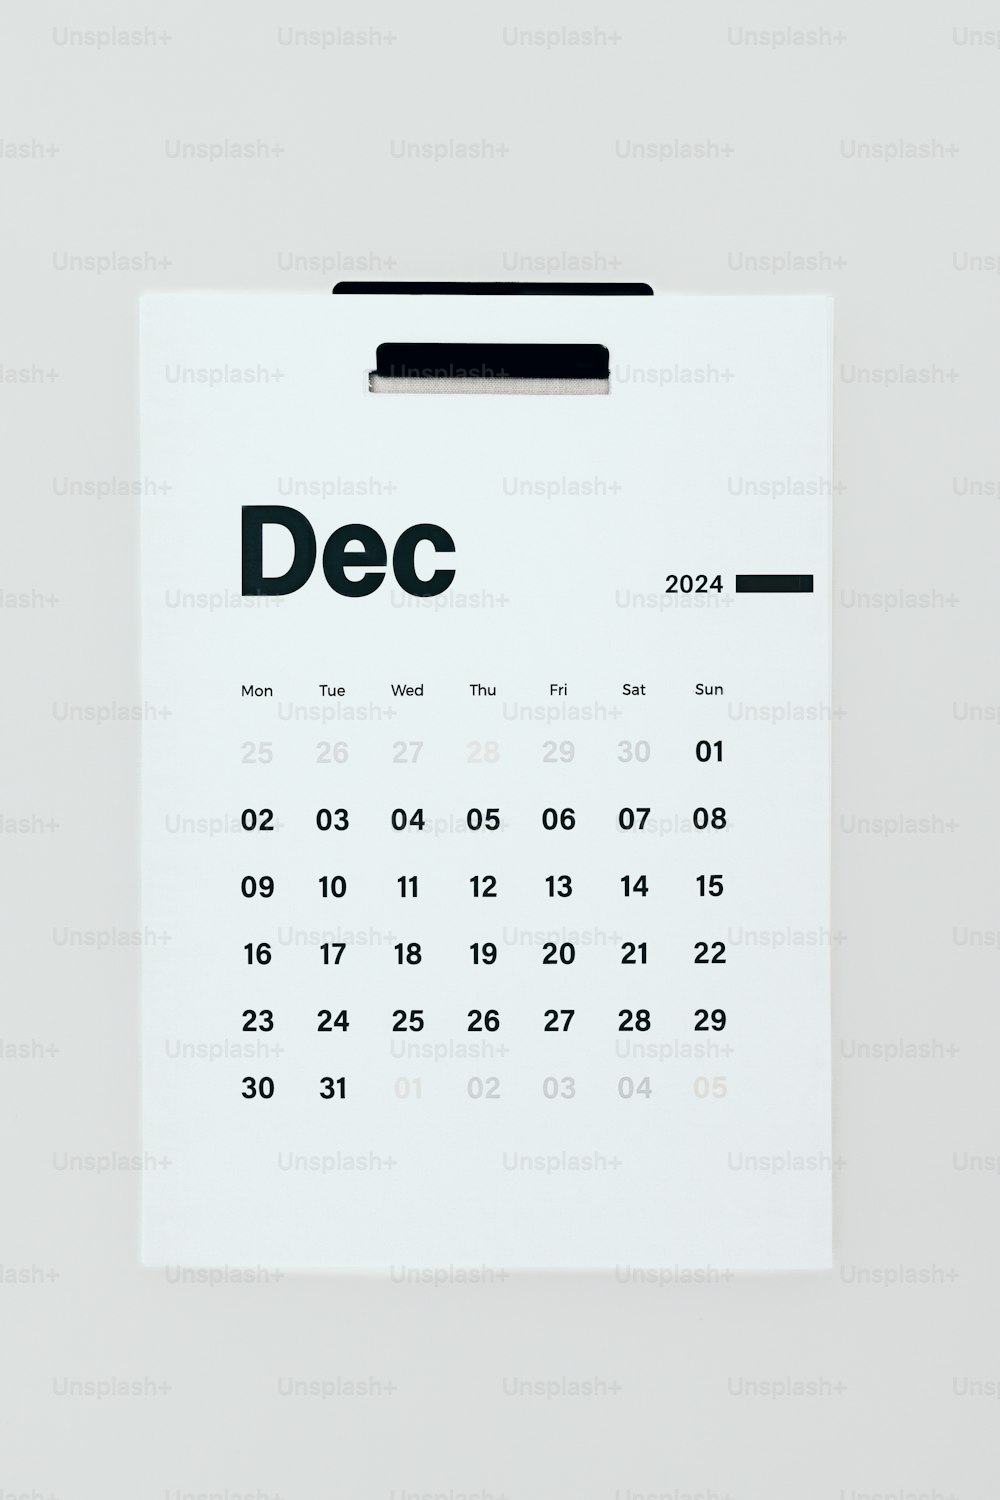 「dec」という単語が記載された卓上カレンダー